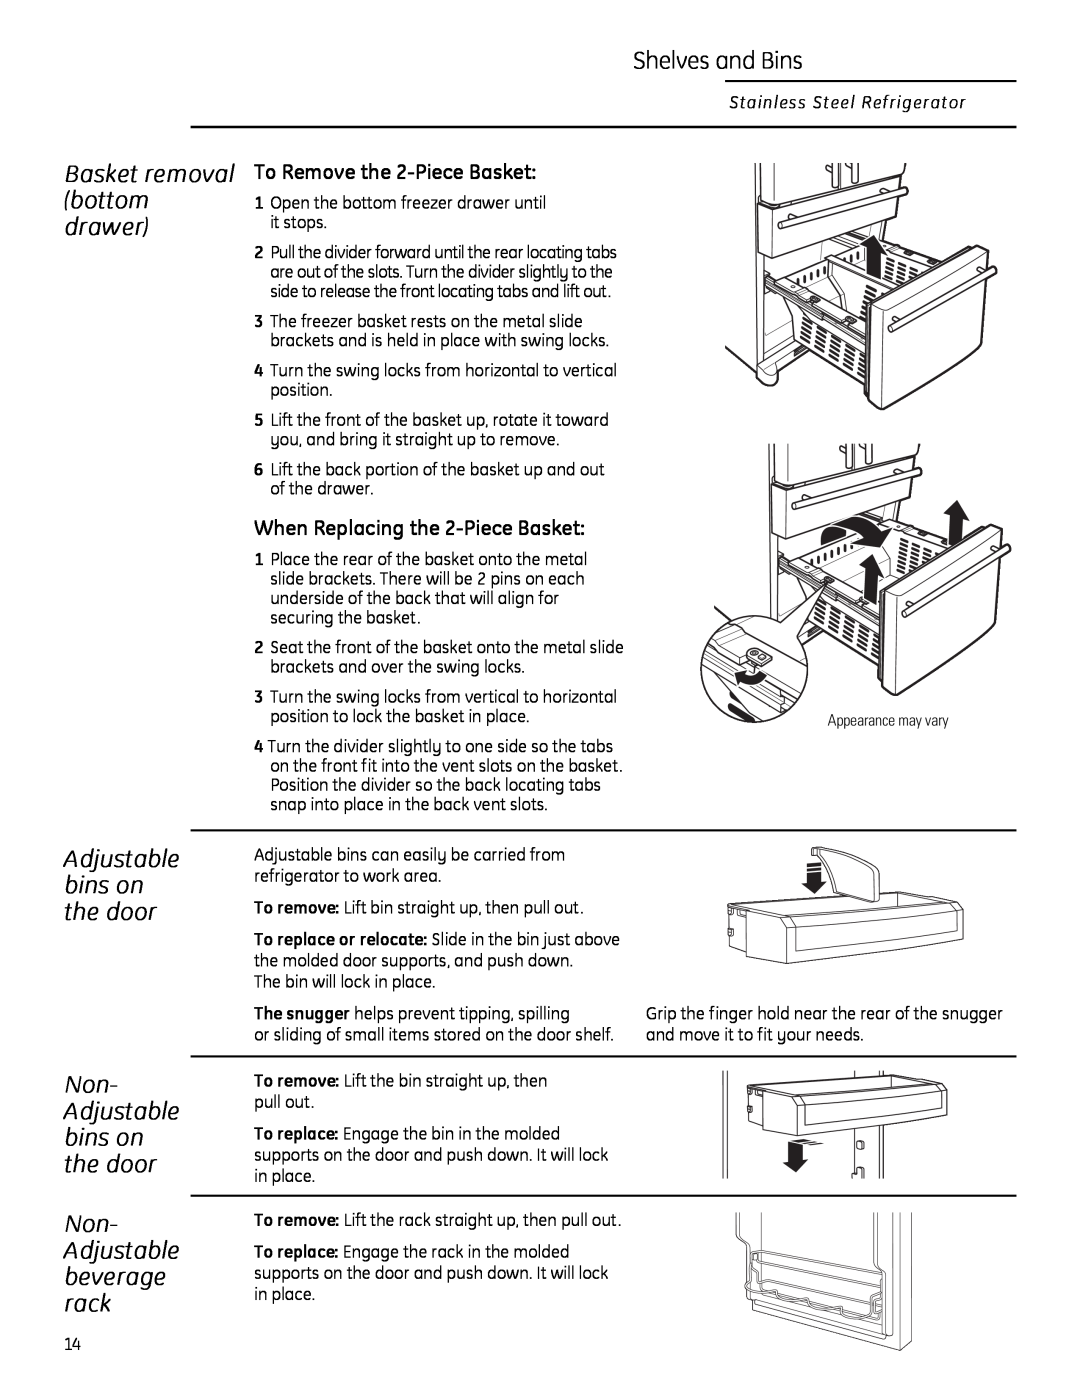 GE Monogram 225D1804P011 owner manual Basket removal bottom drawer, Adjustable bins on the door, Shelves and Bins 